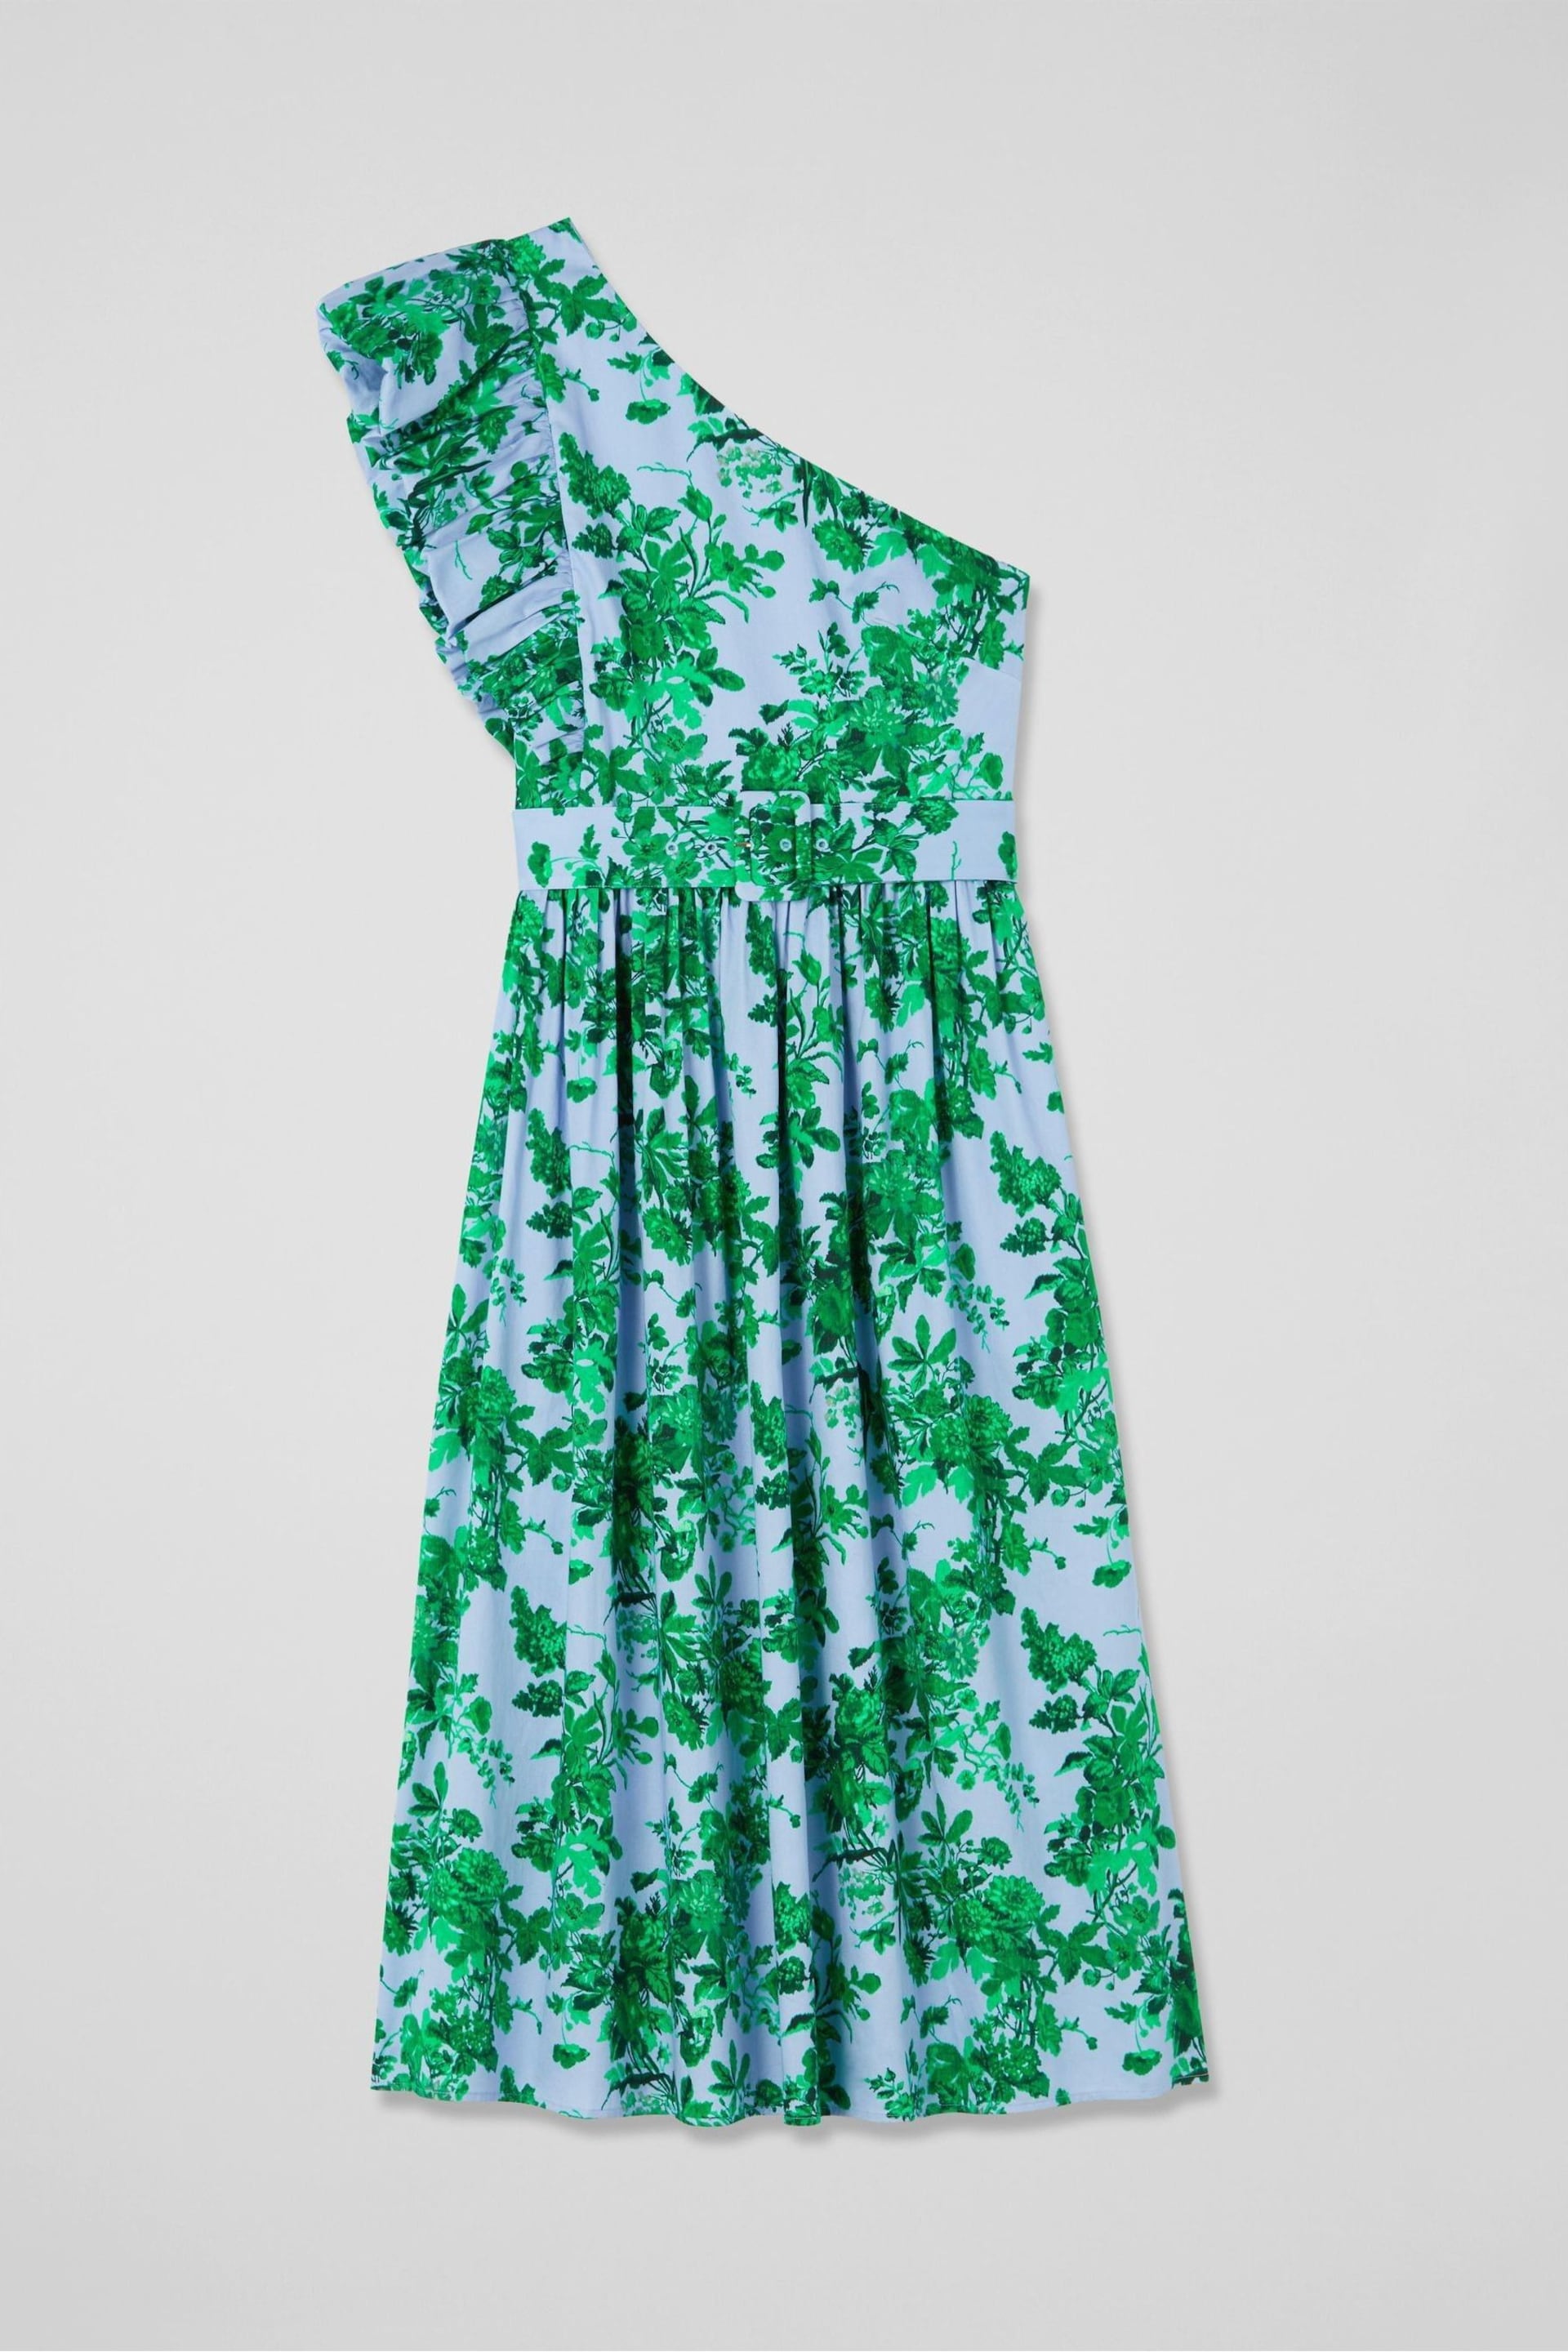 LK Bennett Maud Neon Garden Print Cotton One-Shoulder Dress - Image 4 of 4